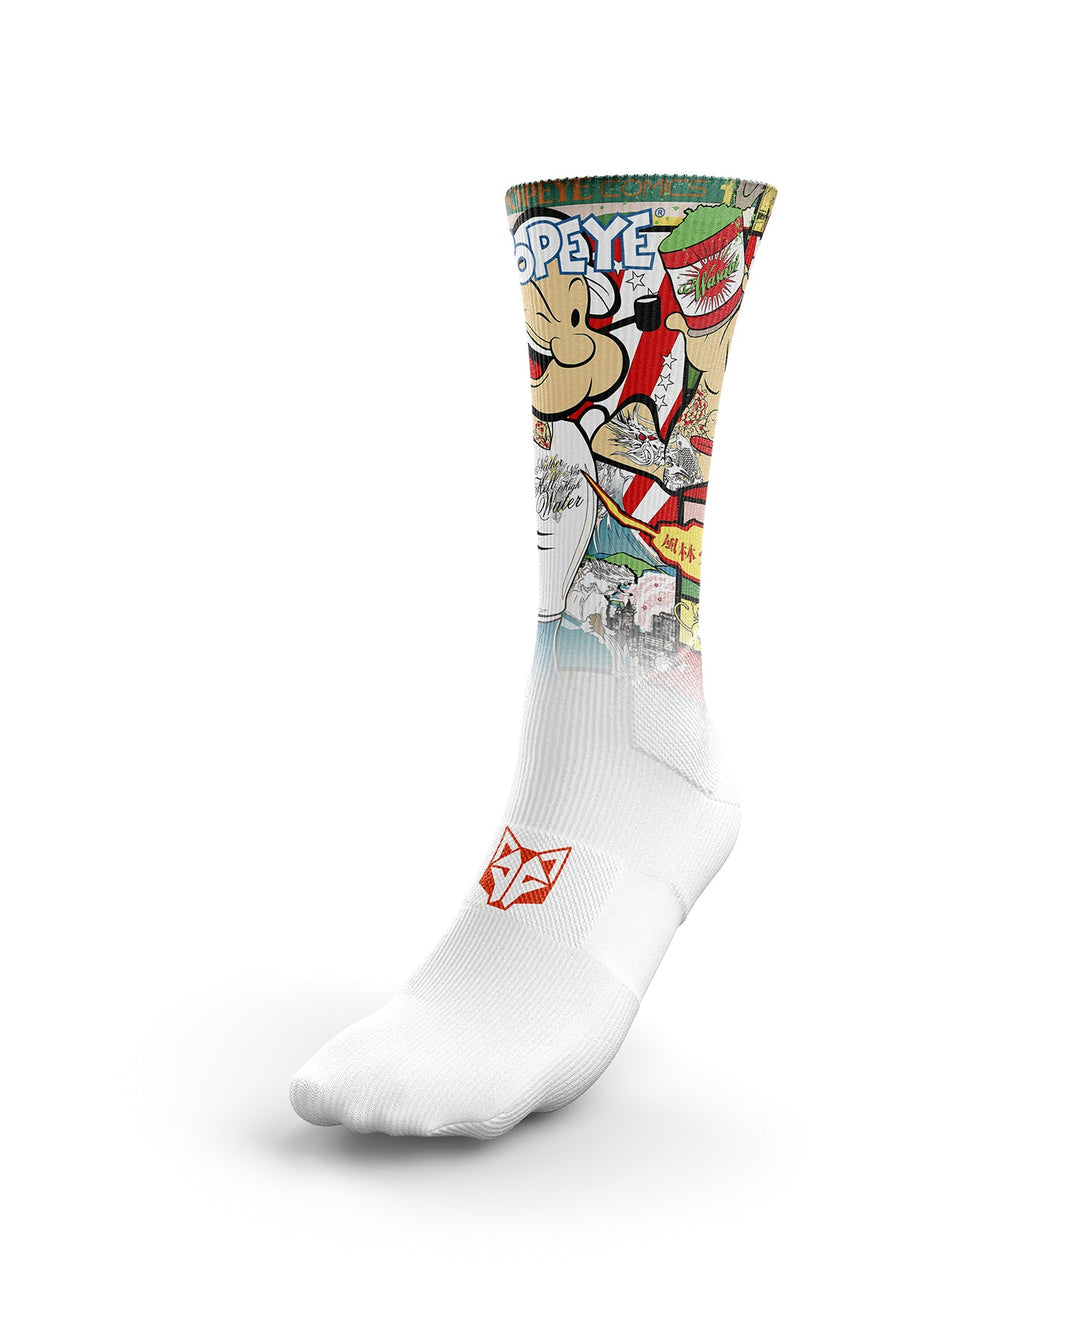 OTSO Popeye Art Show High Cut Socks (オツソ マルチスポーツソックス ハイカット ポパイ・アートショー)